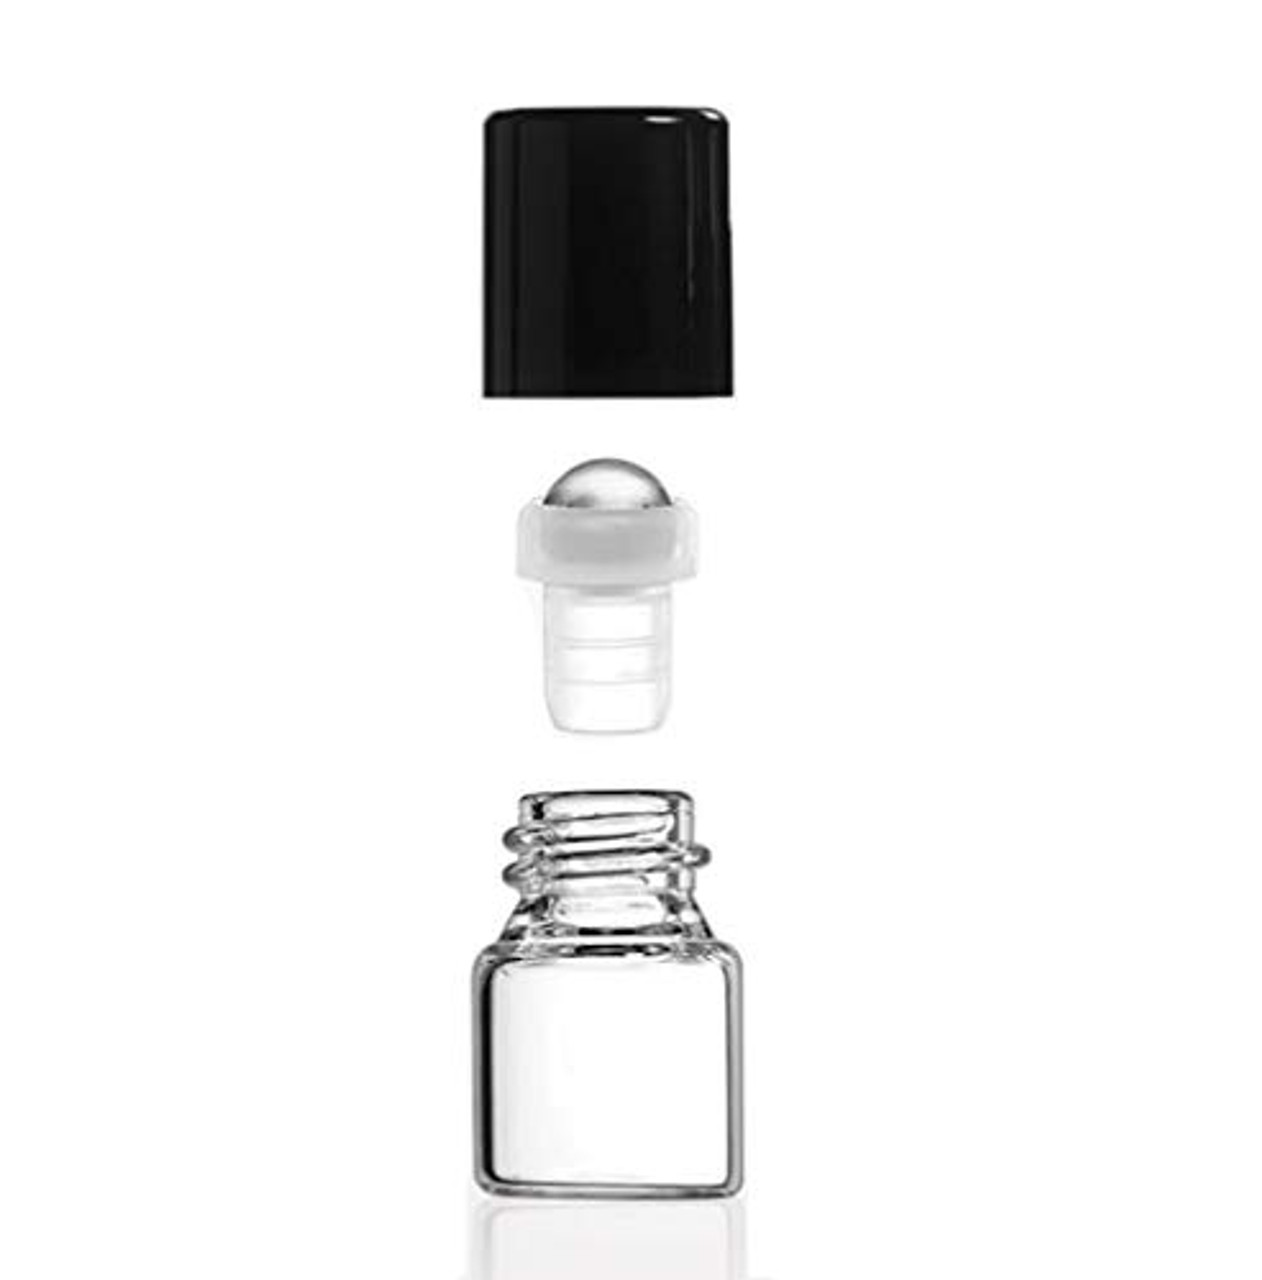  Queen Scepter 5ML Roller Ball Glass Perfume Bottle Refill  Bottles Atomizer Empty Travel Spray Scent Pump Case for Perfume Essential  Oil Eye Gel Silver : Home & Kitchen